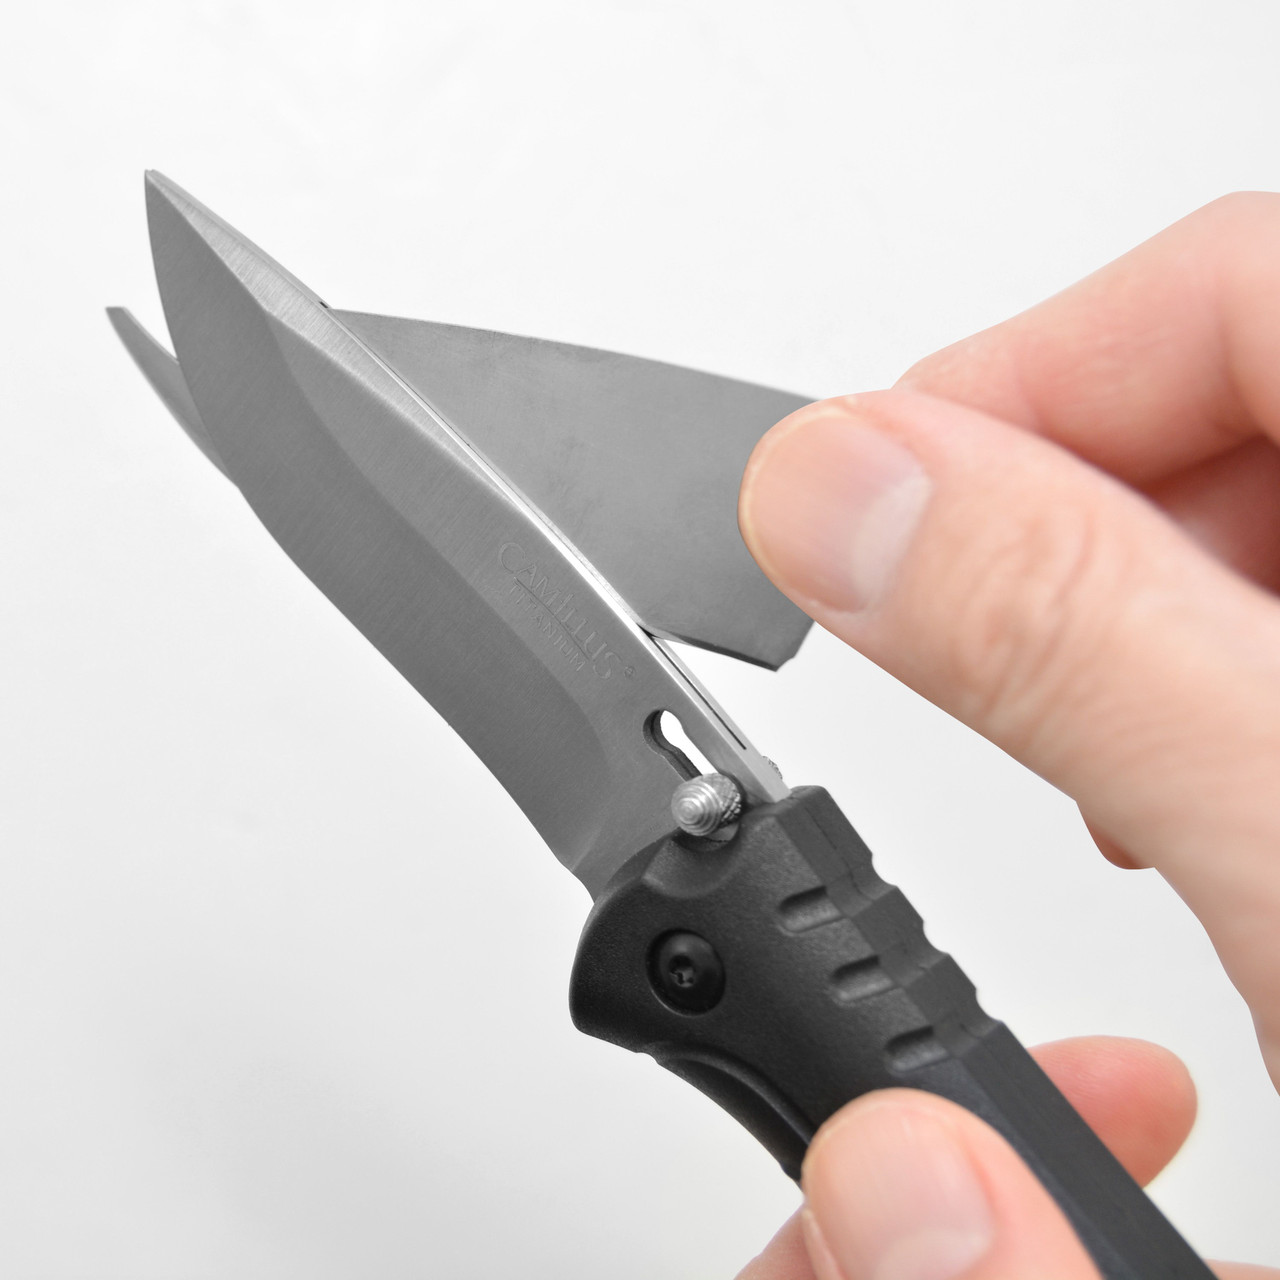 Camillus Tigersharp 8" Fixed Blade Knife